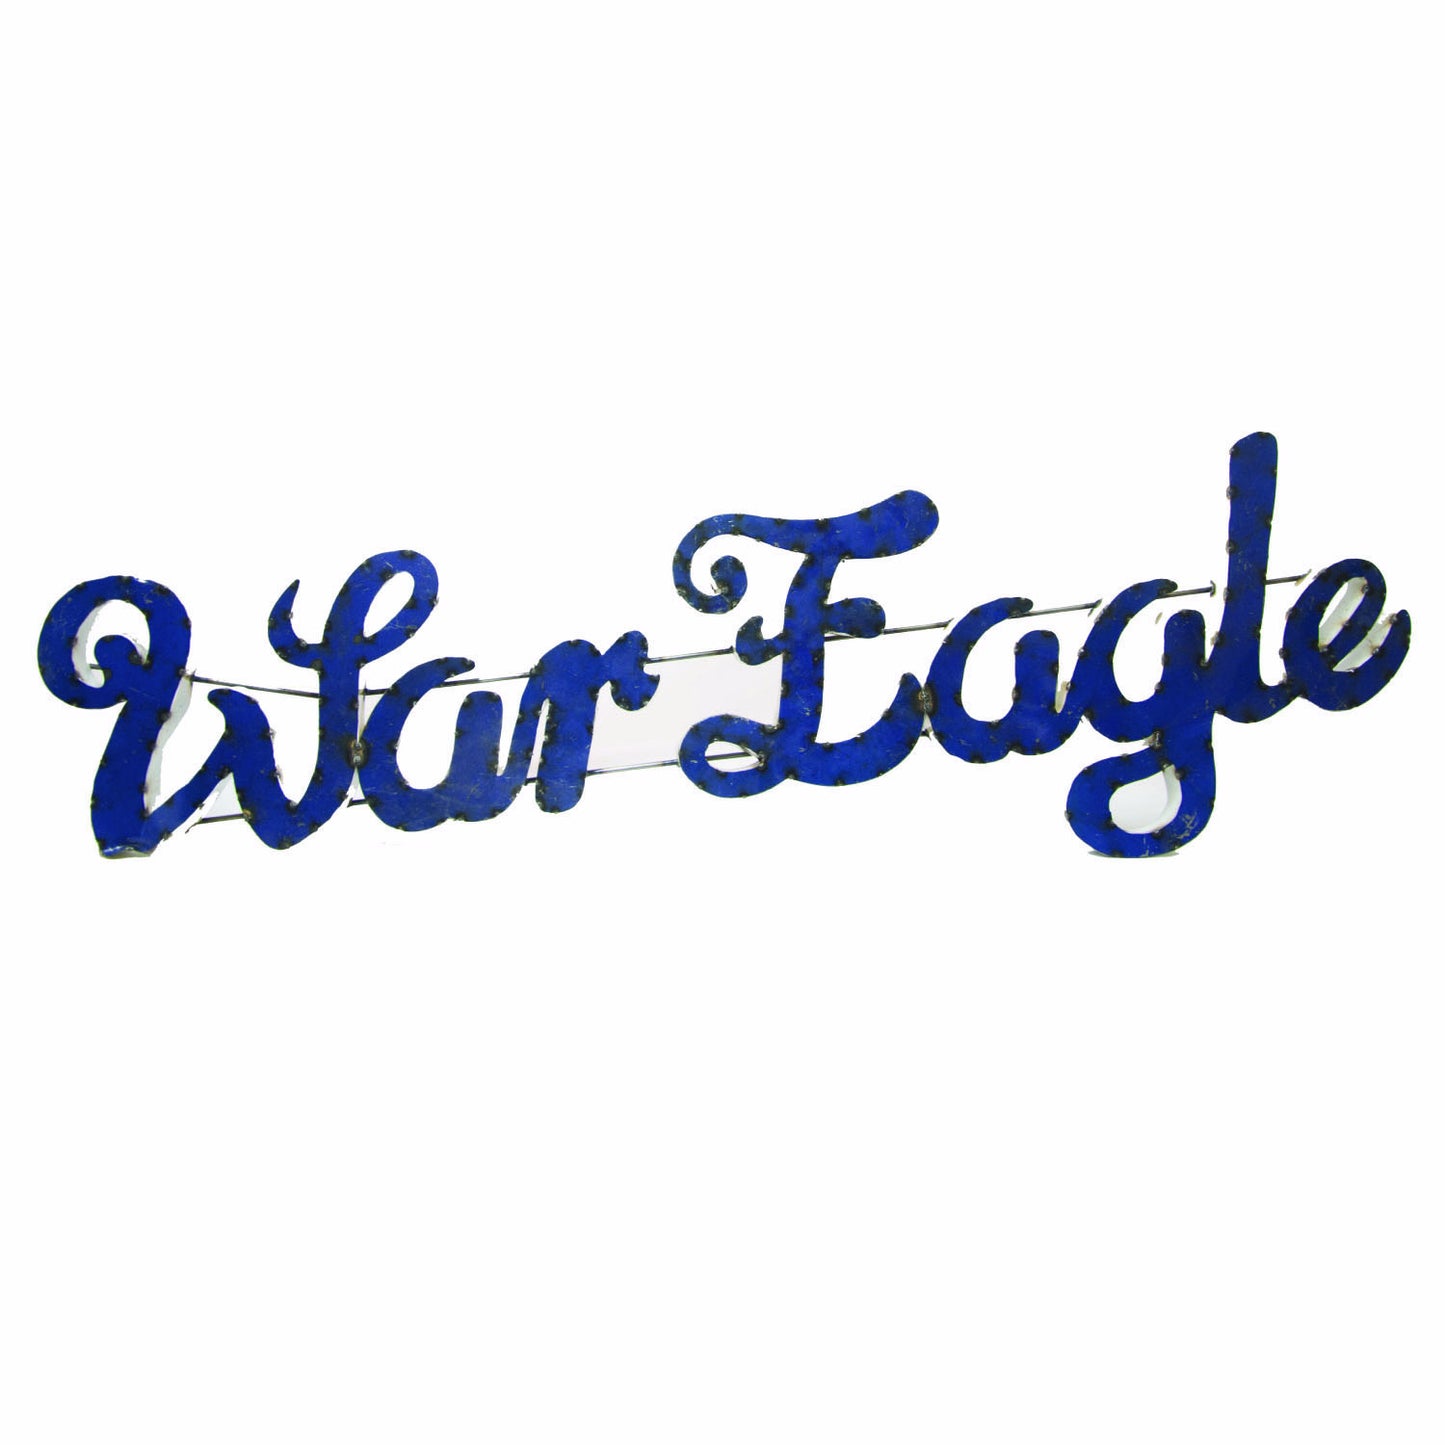 Auburn University "War Eagle" SINGLE ROW   Recycled Metal Sign